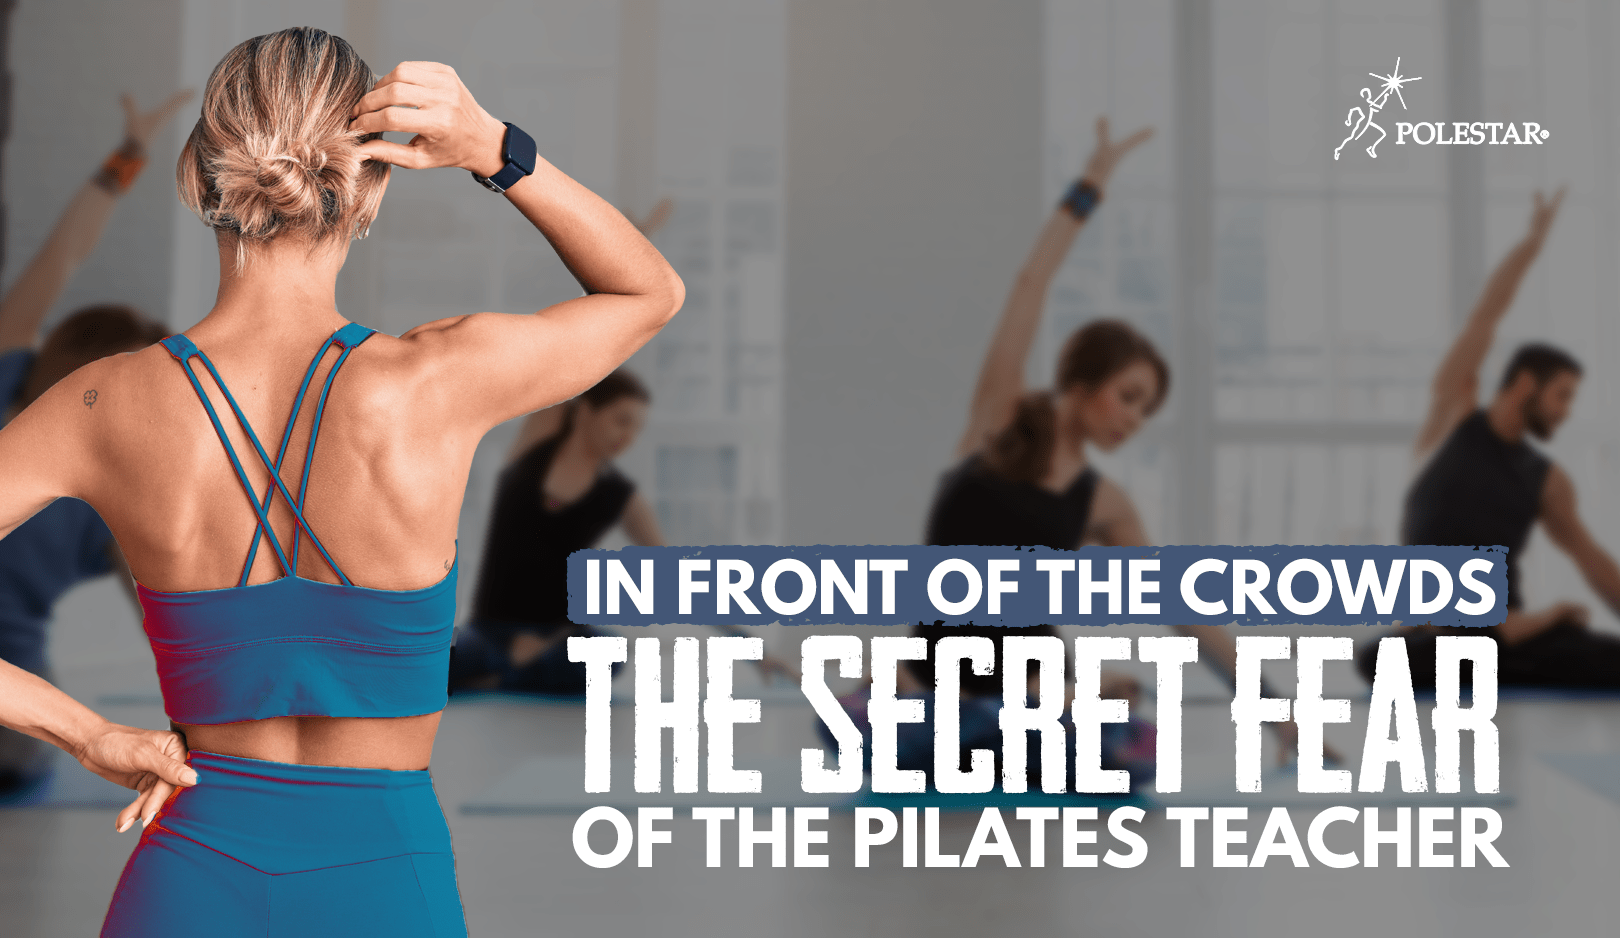 Pilates Teacher Training - Listen to yourself